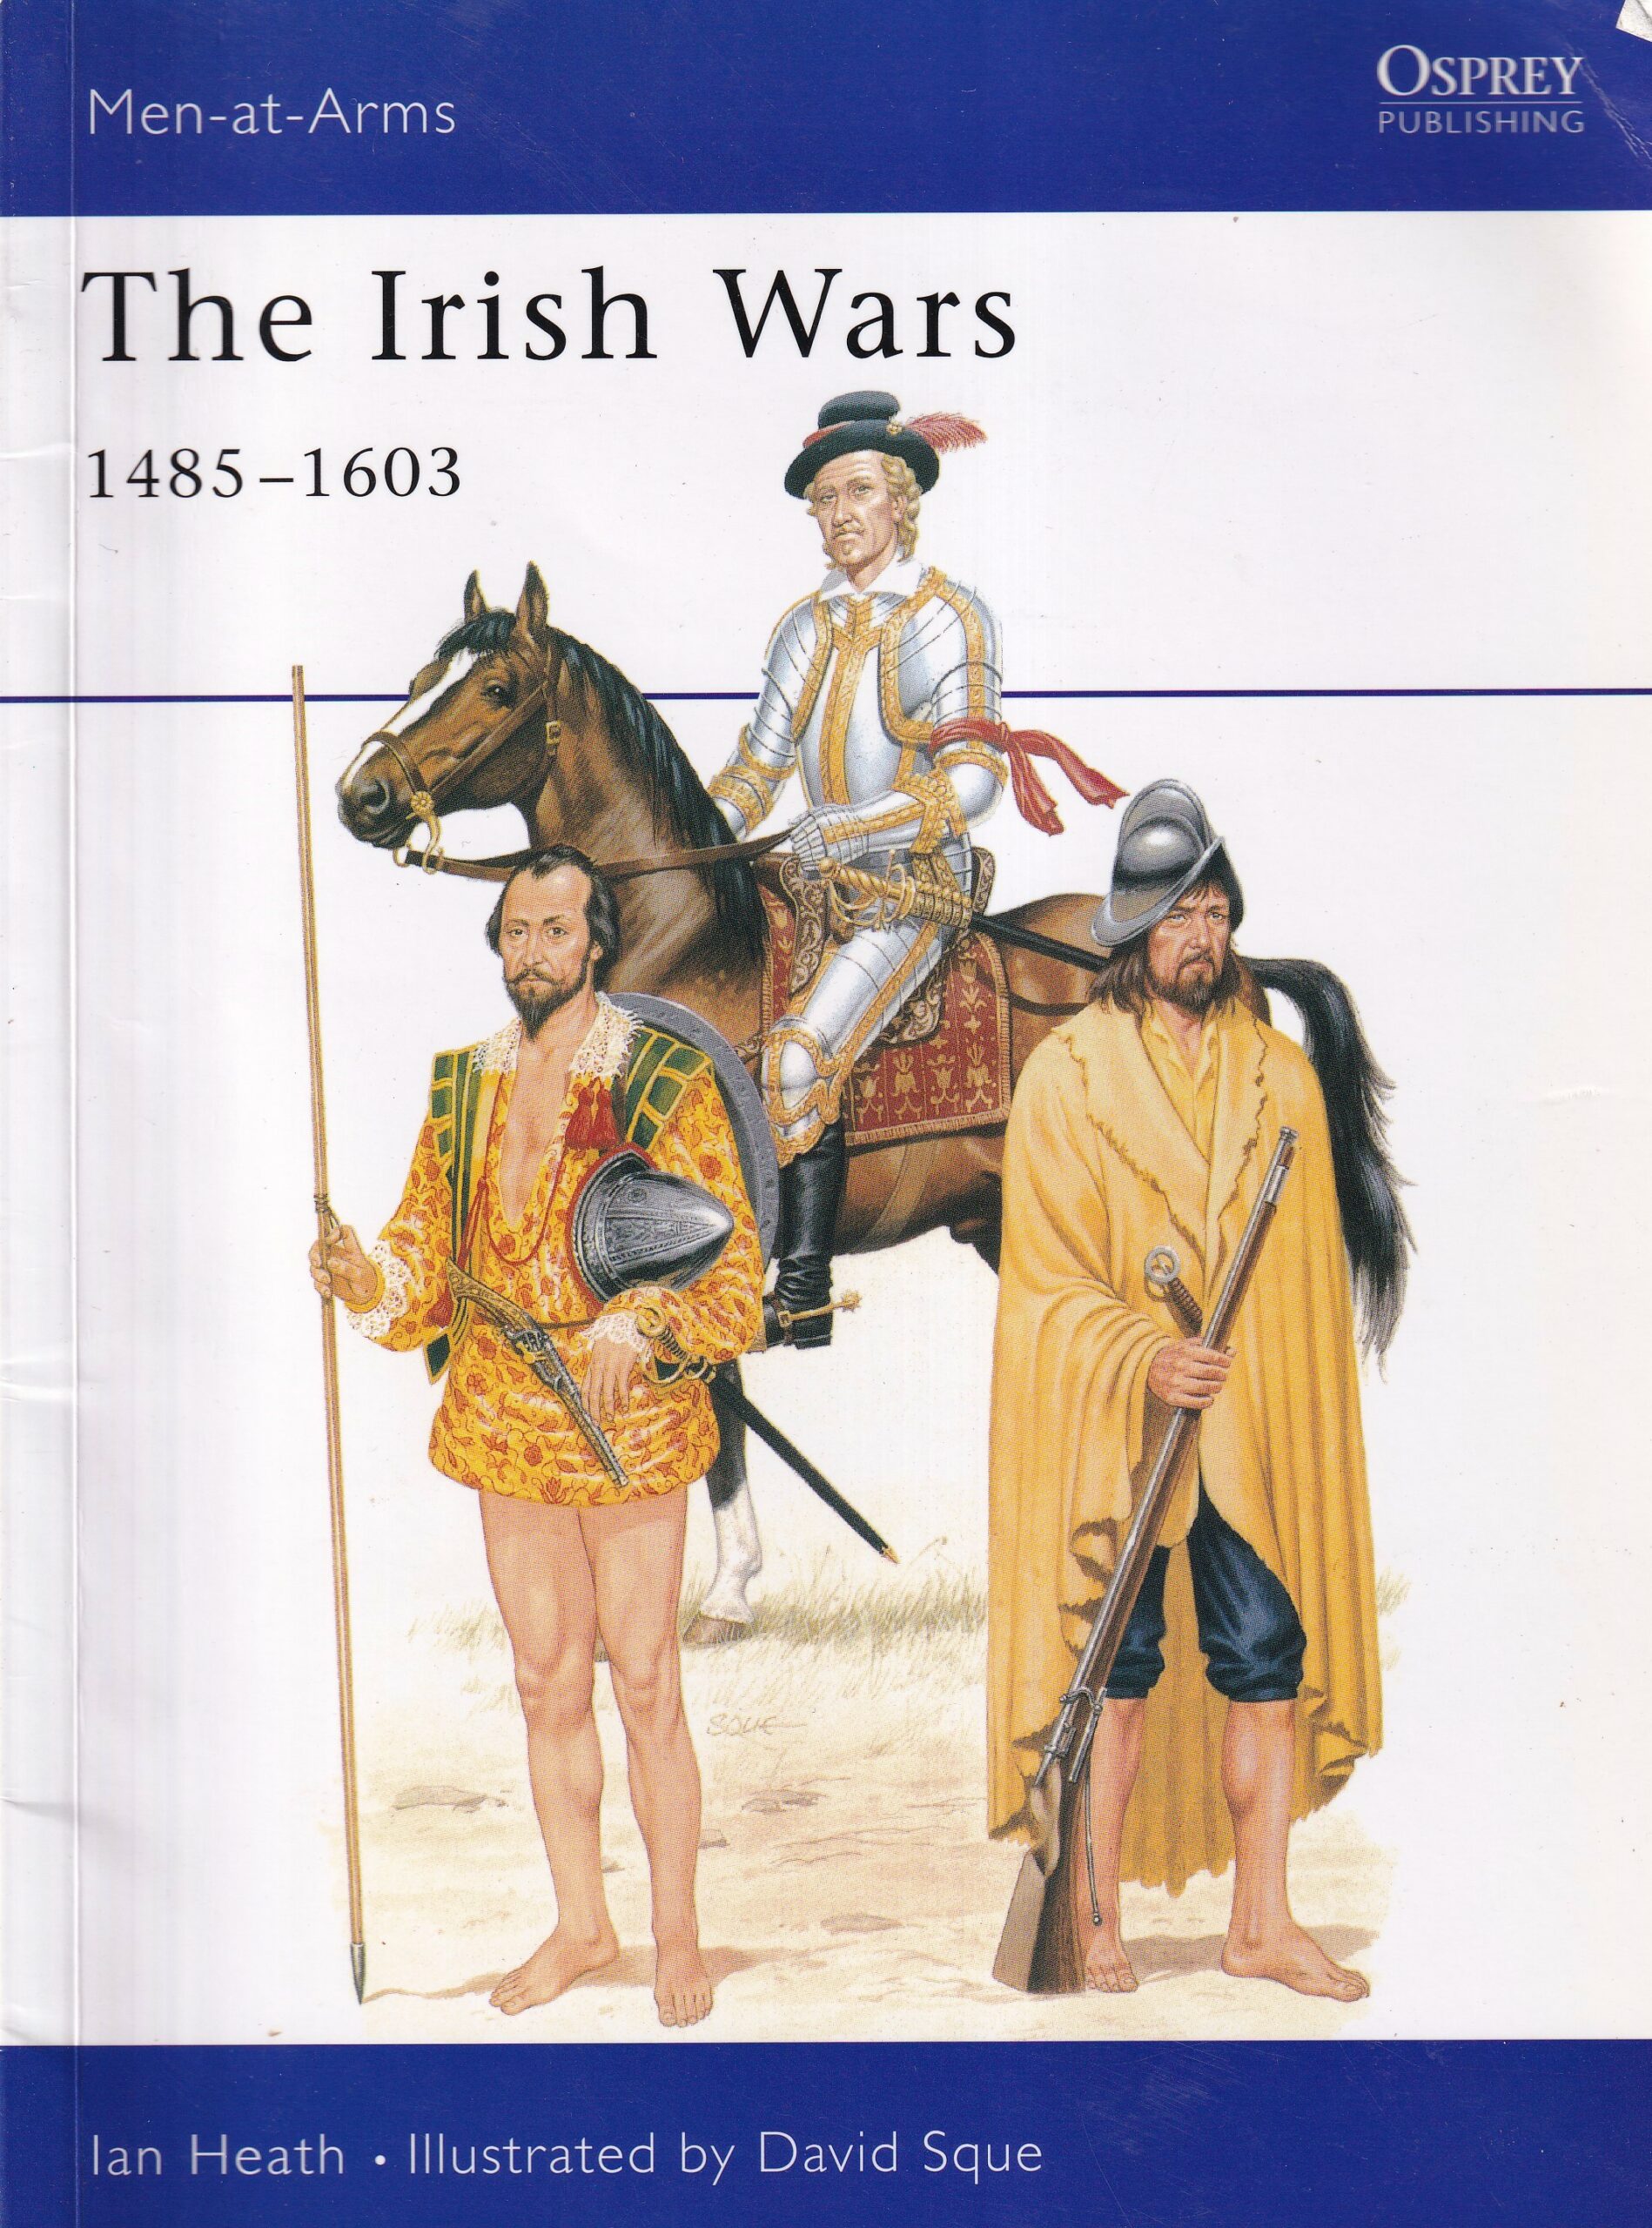 The Irish Wars 1485-1603 by Ian Heathe